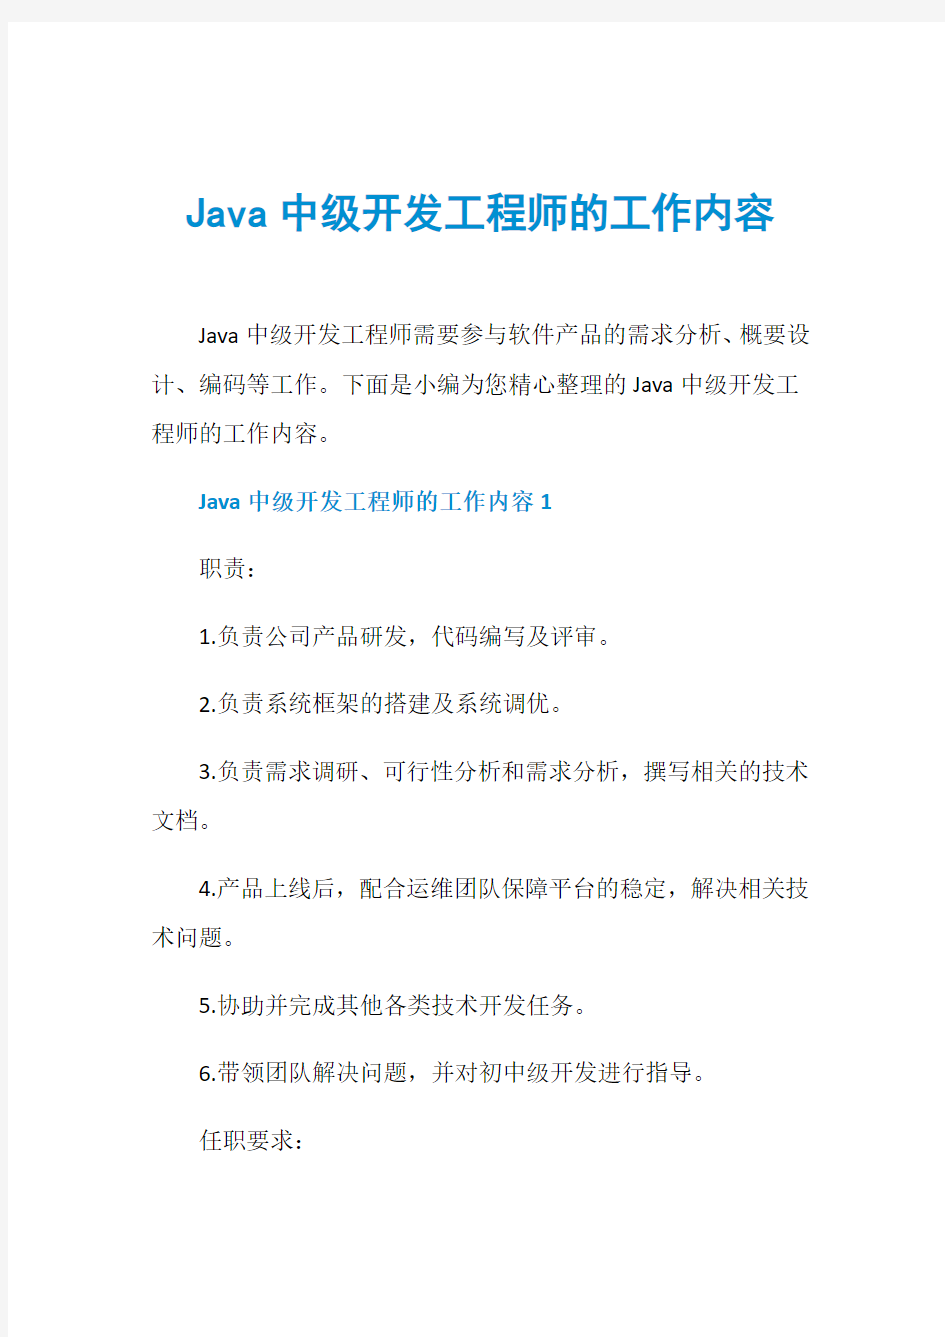 Java中级开发工程师的工作内容